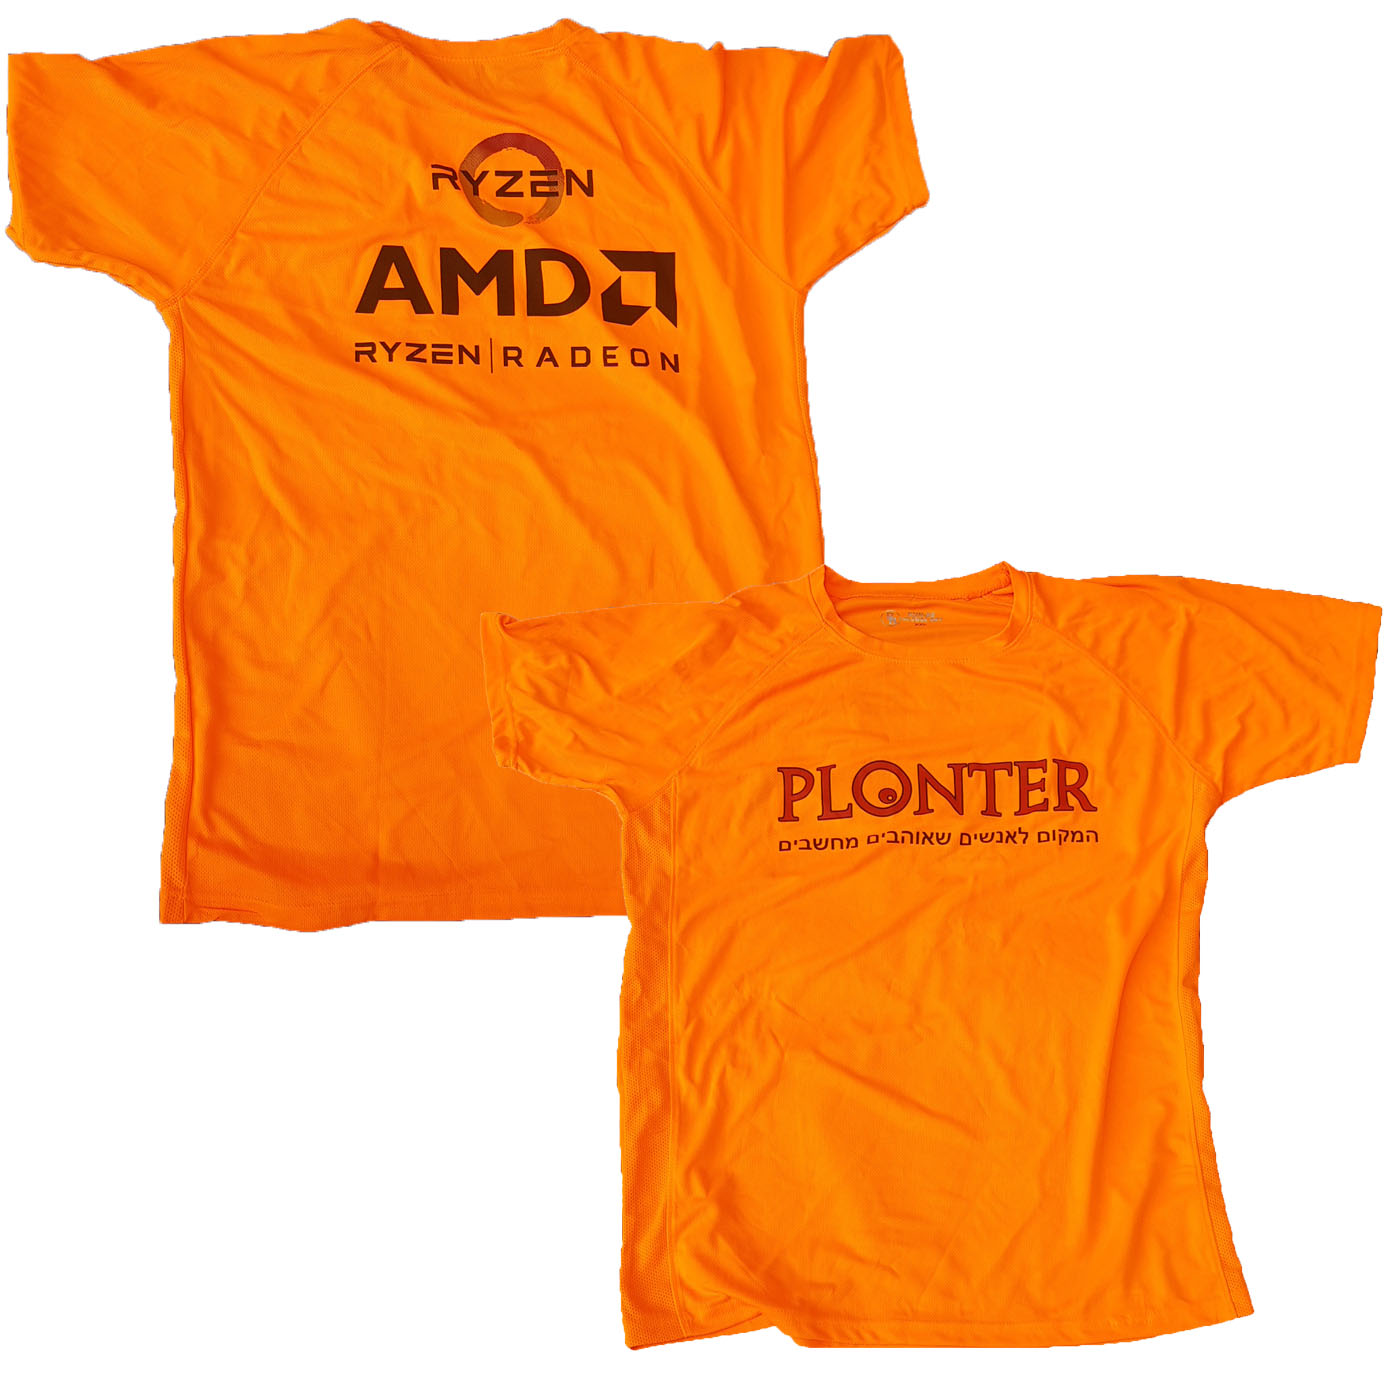 Plonter - Plonter2019-AMD-Orange -   